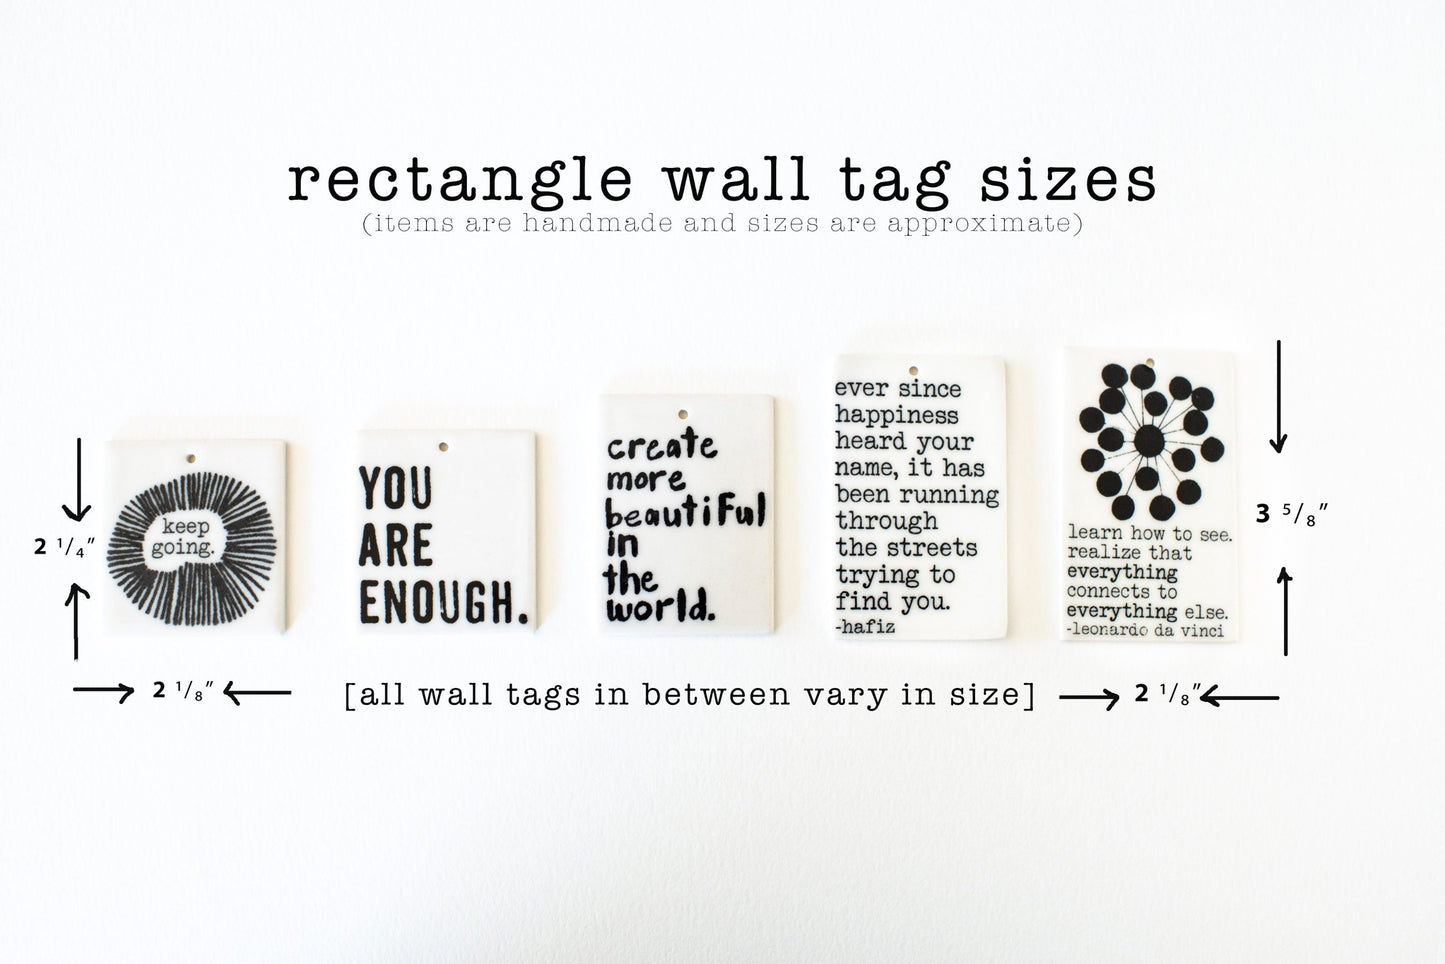 hafiz hafez ceramic wall tag